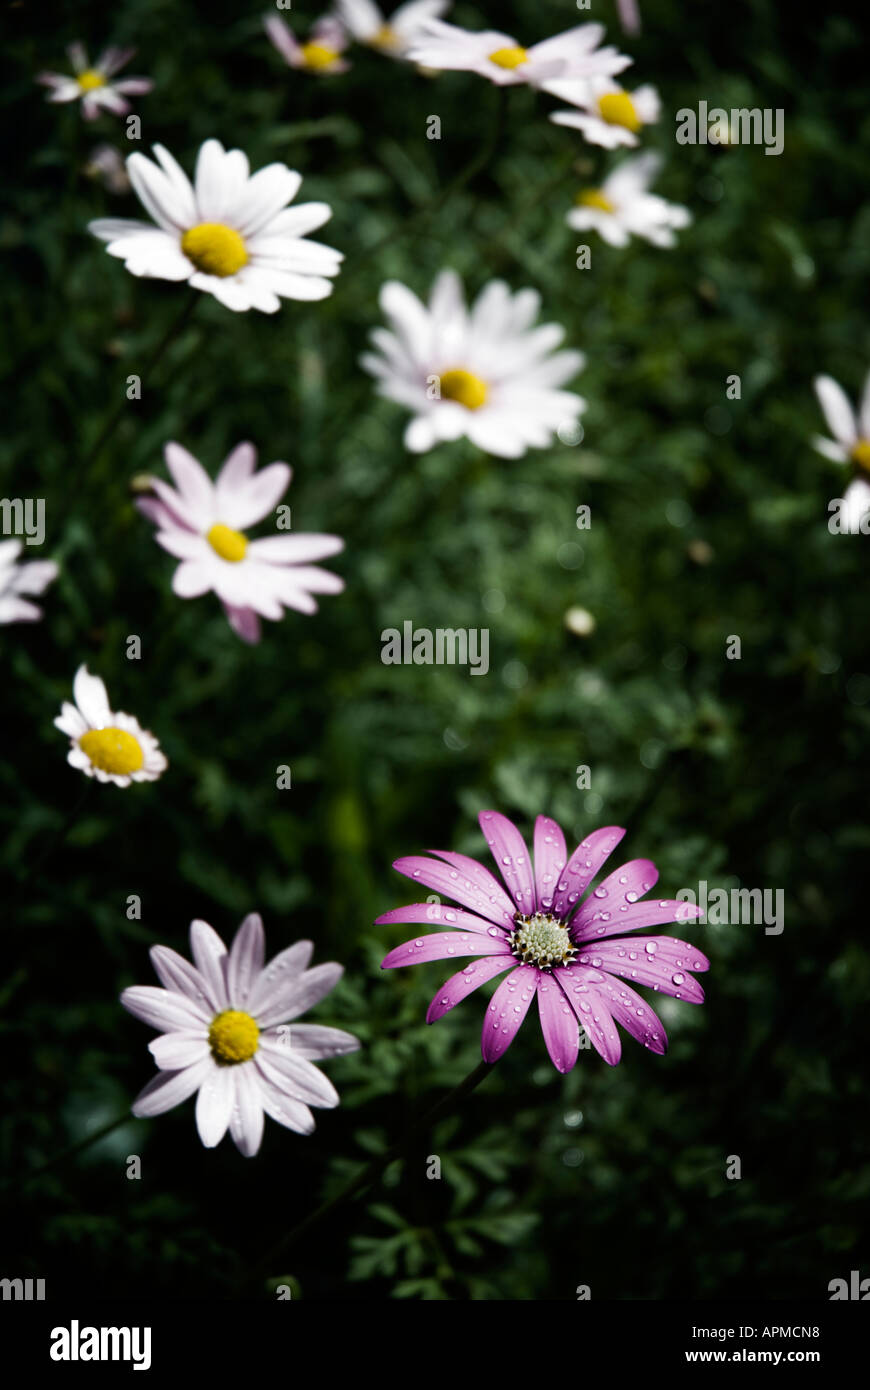 A cape daisy osteospermum surrounded by shasta daisies Leucanthemum x superbum Stock Photo